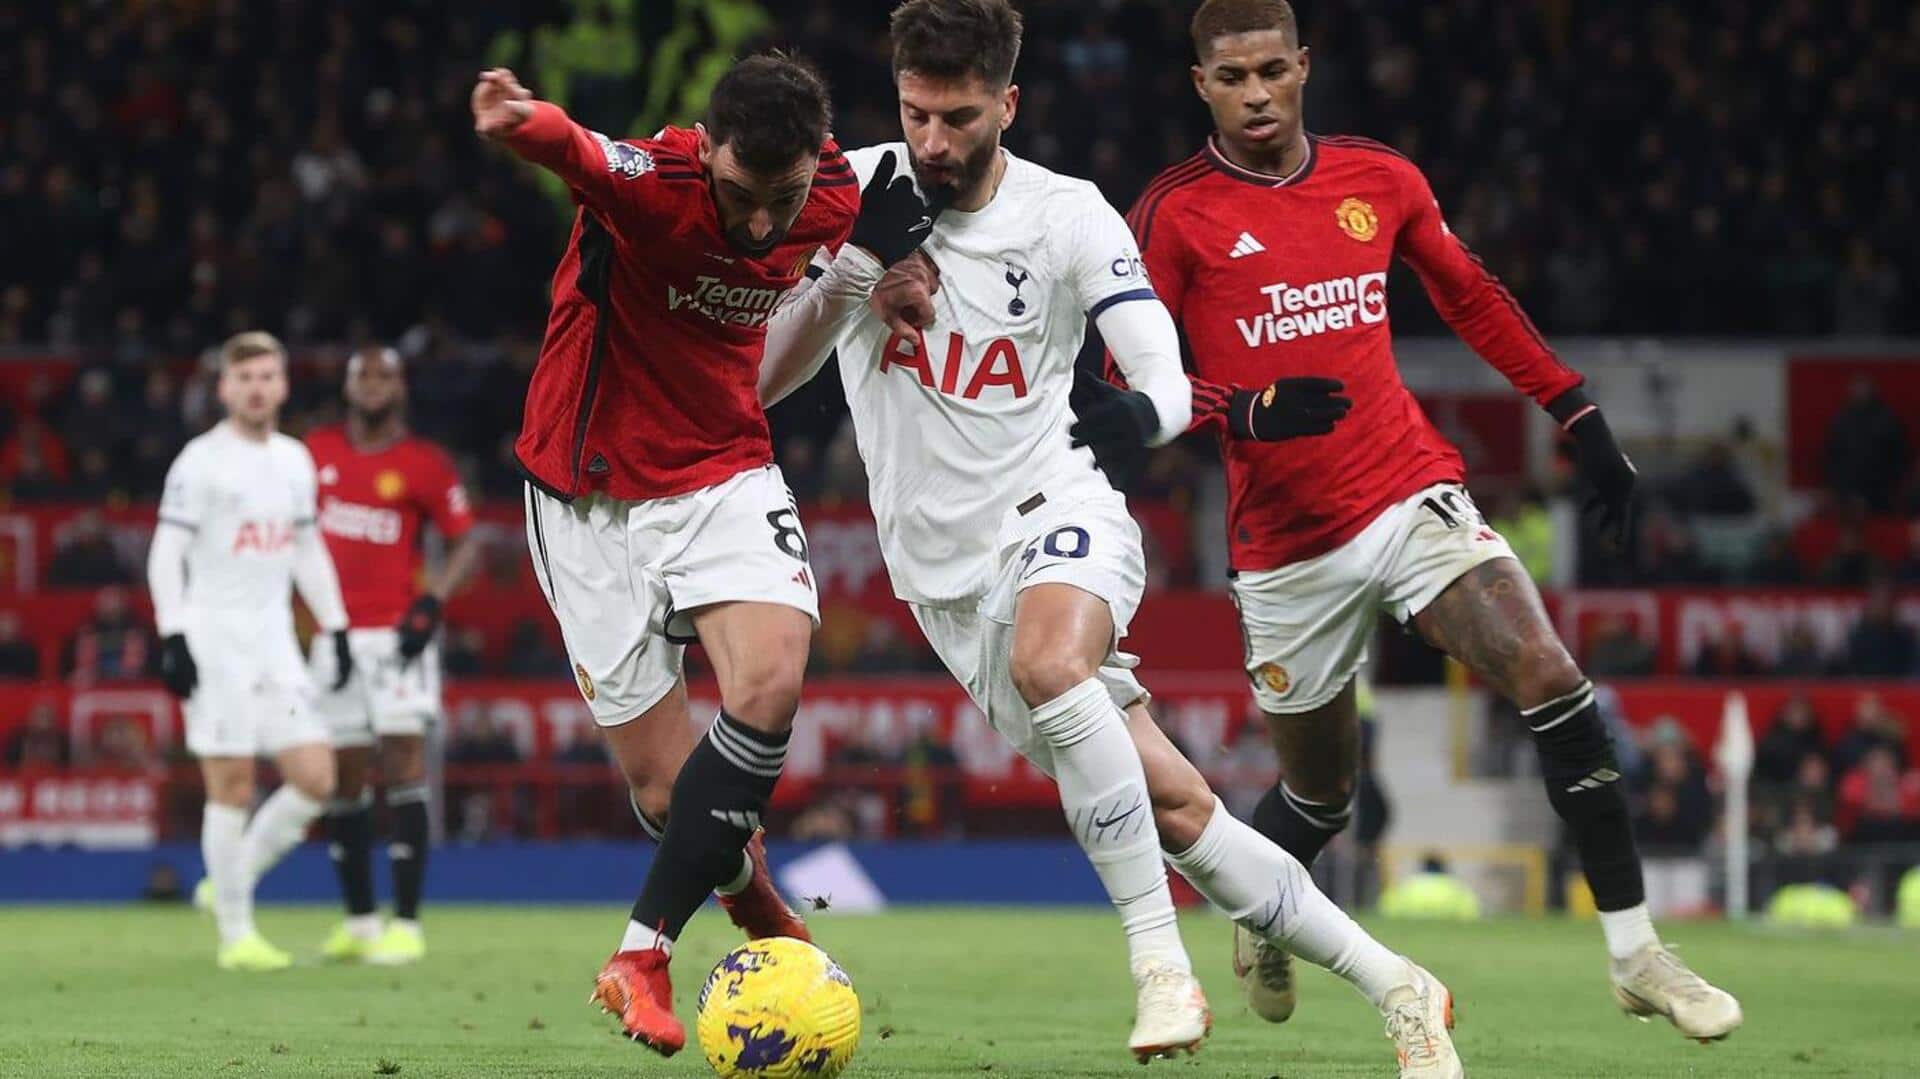 Premier League, Tottenham hold Manchester United 2-2: Key stats